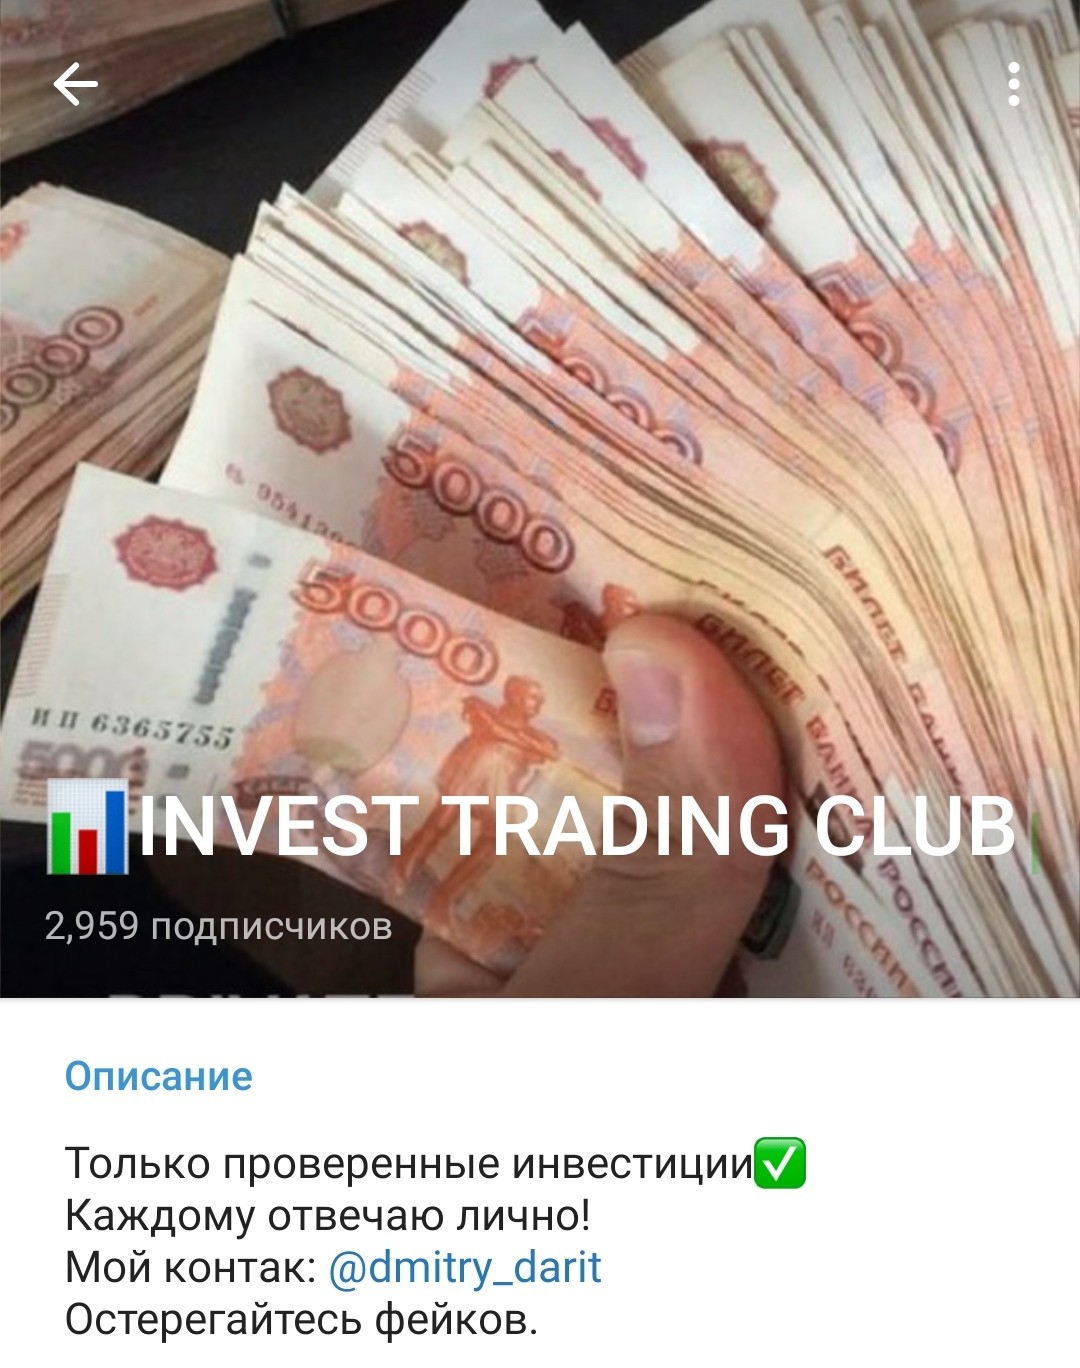 Телеграм проект Invest Trading Club криптотрейдера